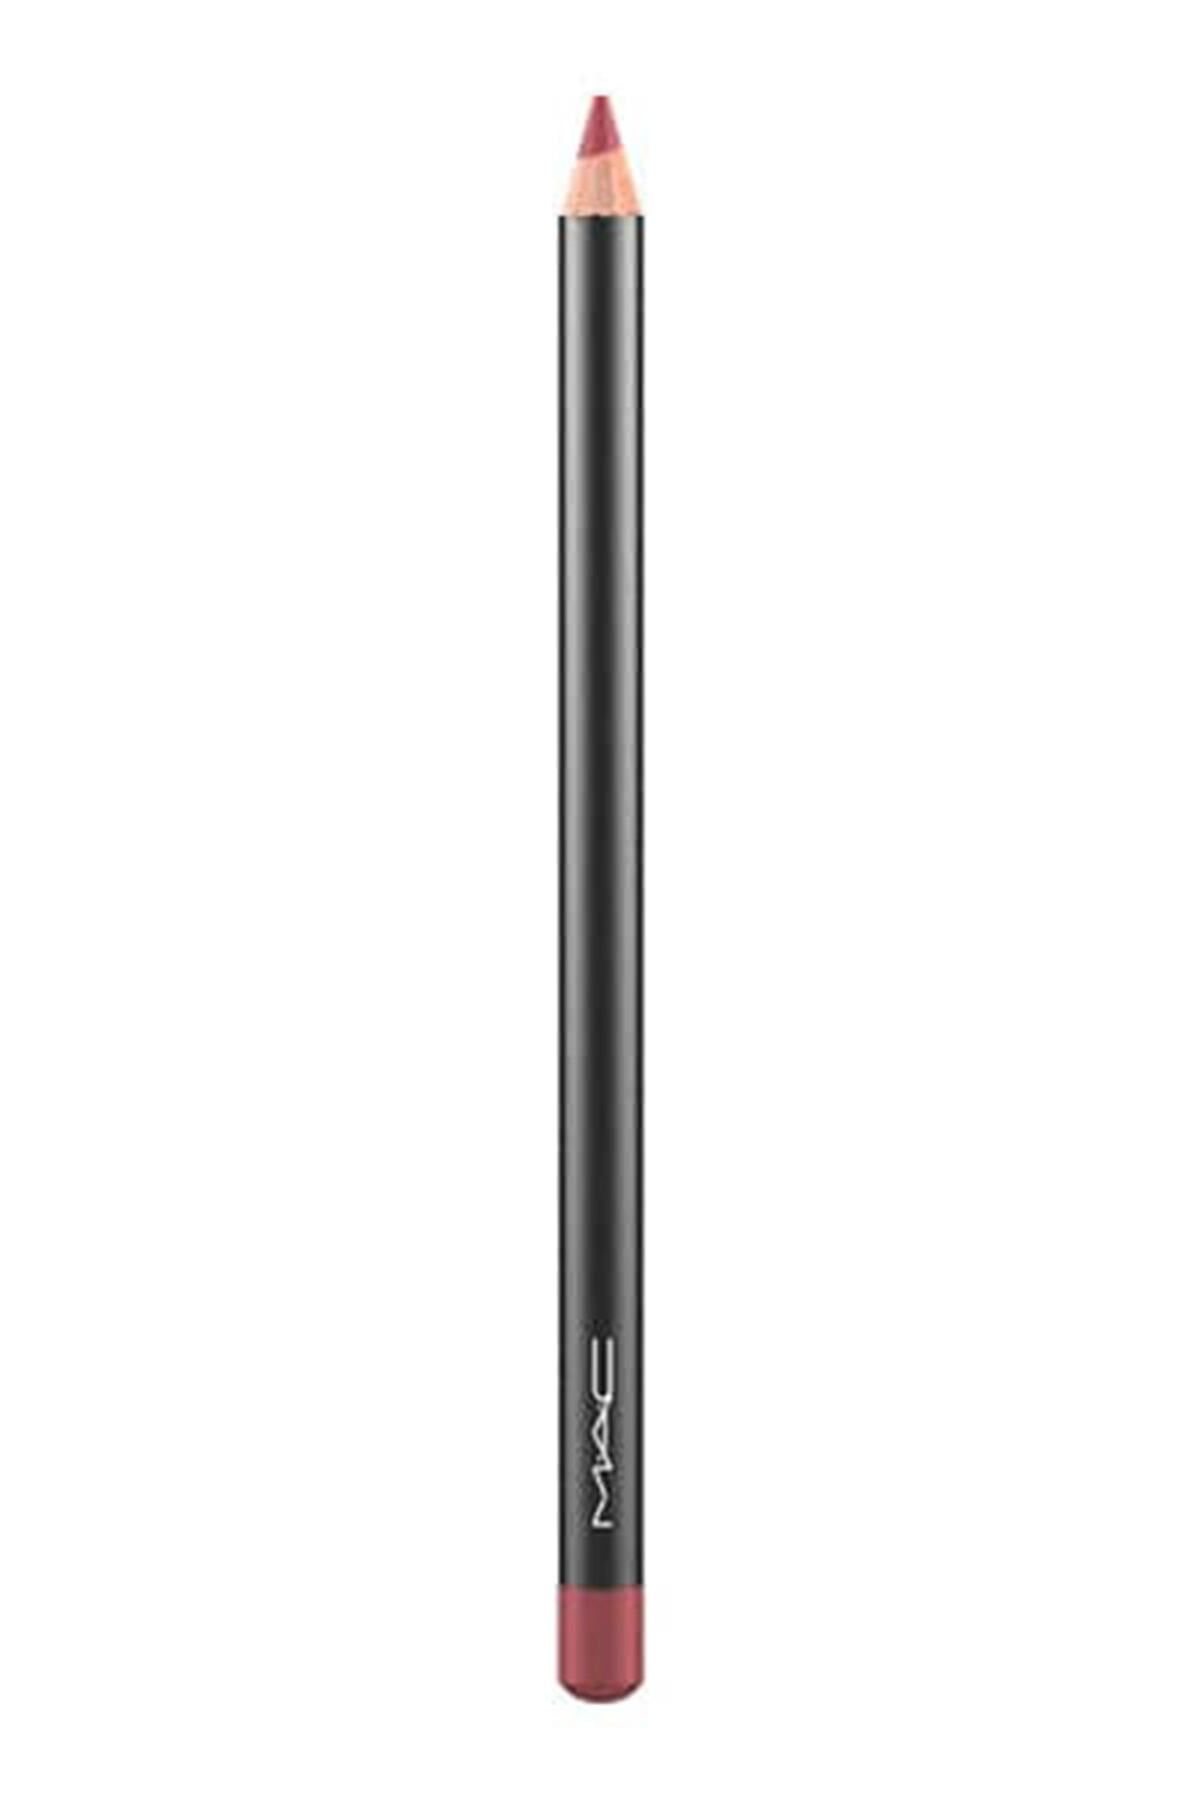 Mac Dudak Kalemi - Lip Pencil  Chicory 1.45 g 773602430031